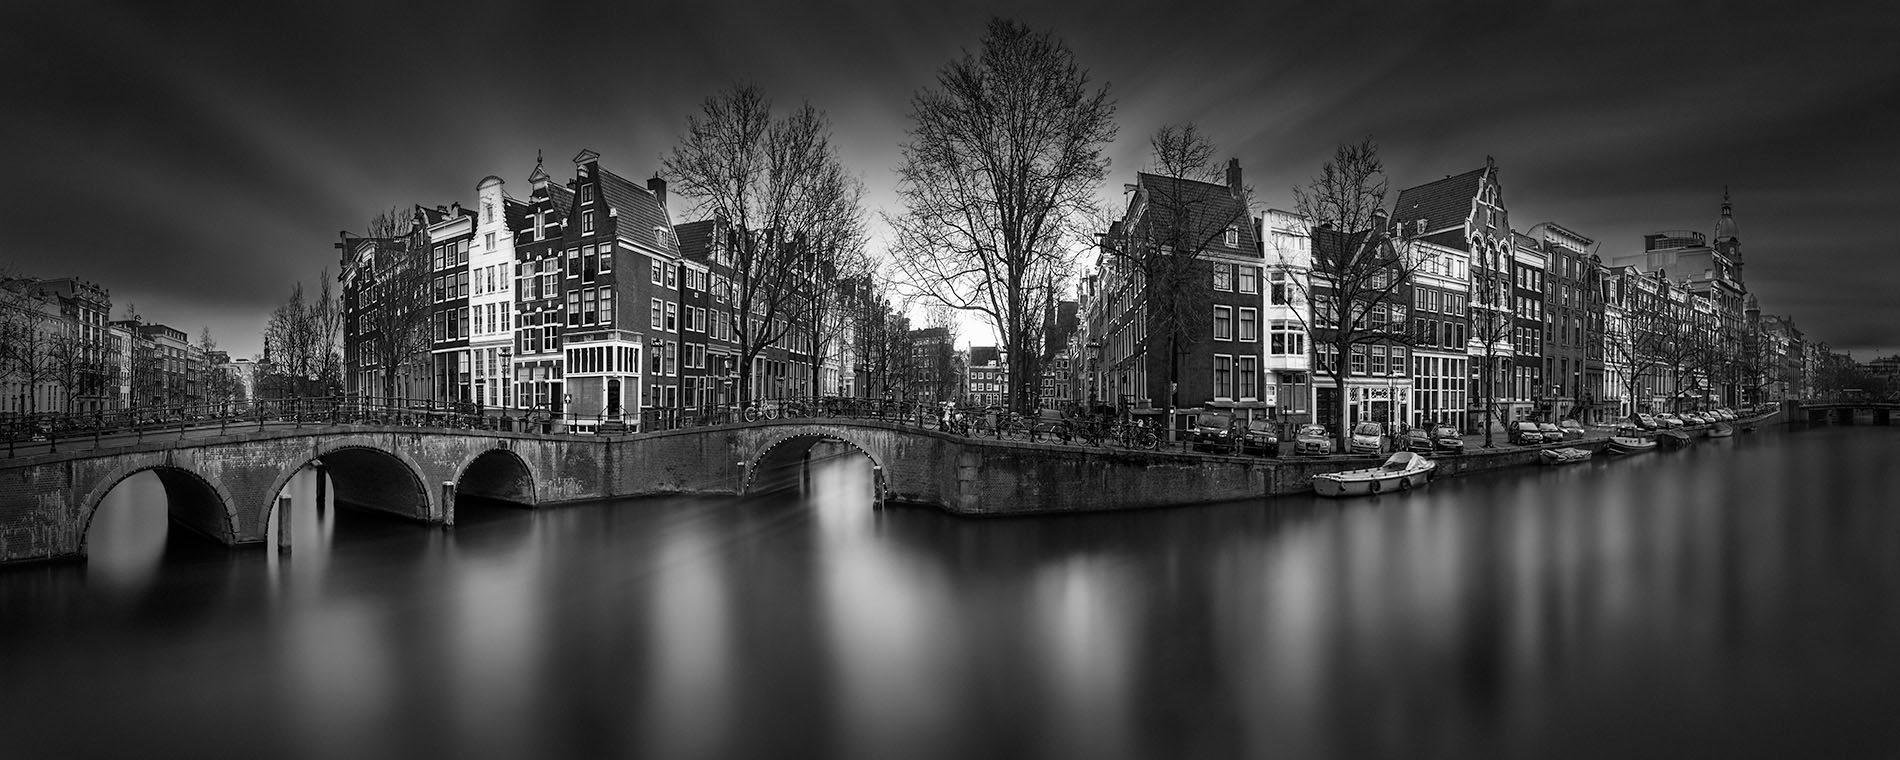 A Tale of the Past I - Keizersgracht Canal Amsterdam - © Julia Anna Gospodarou 2017 - fine art photography principles